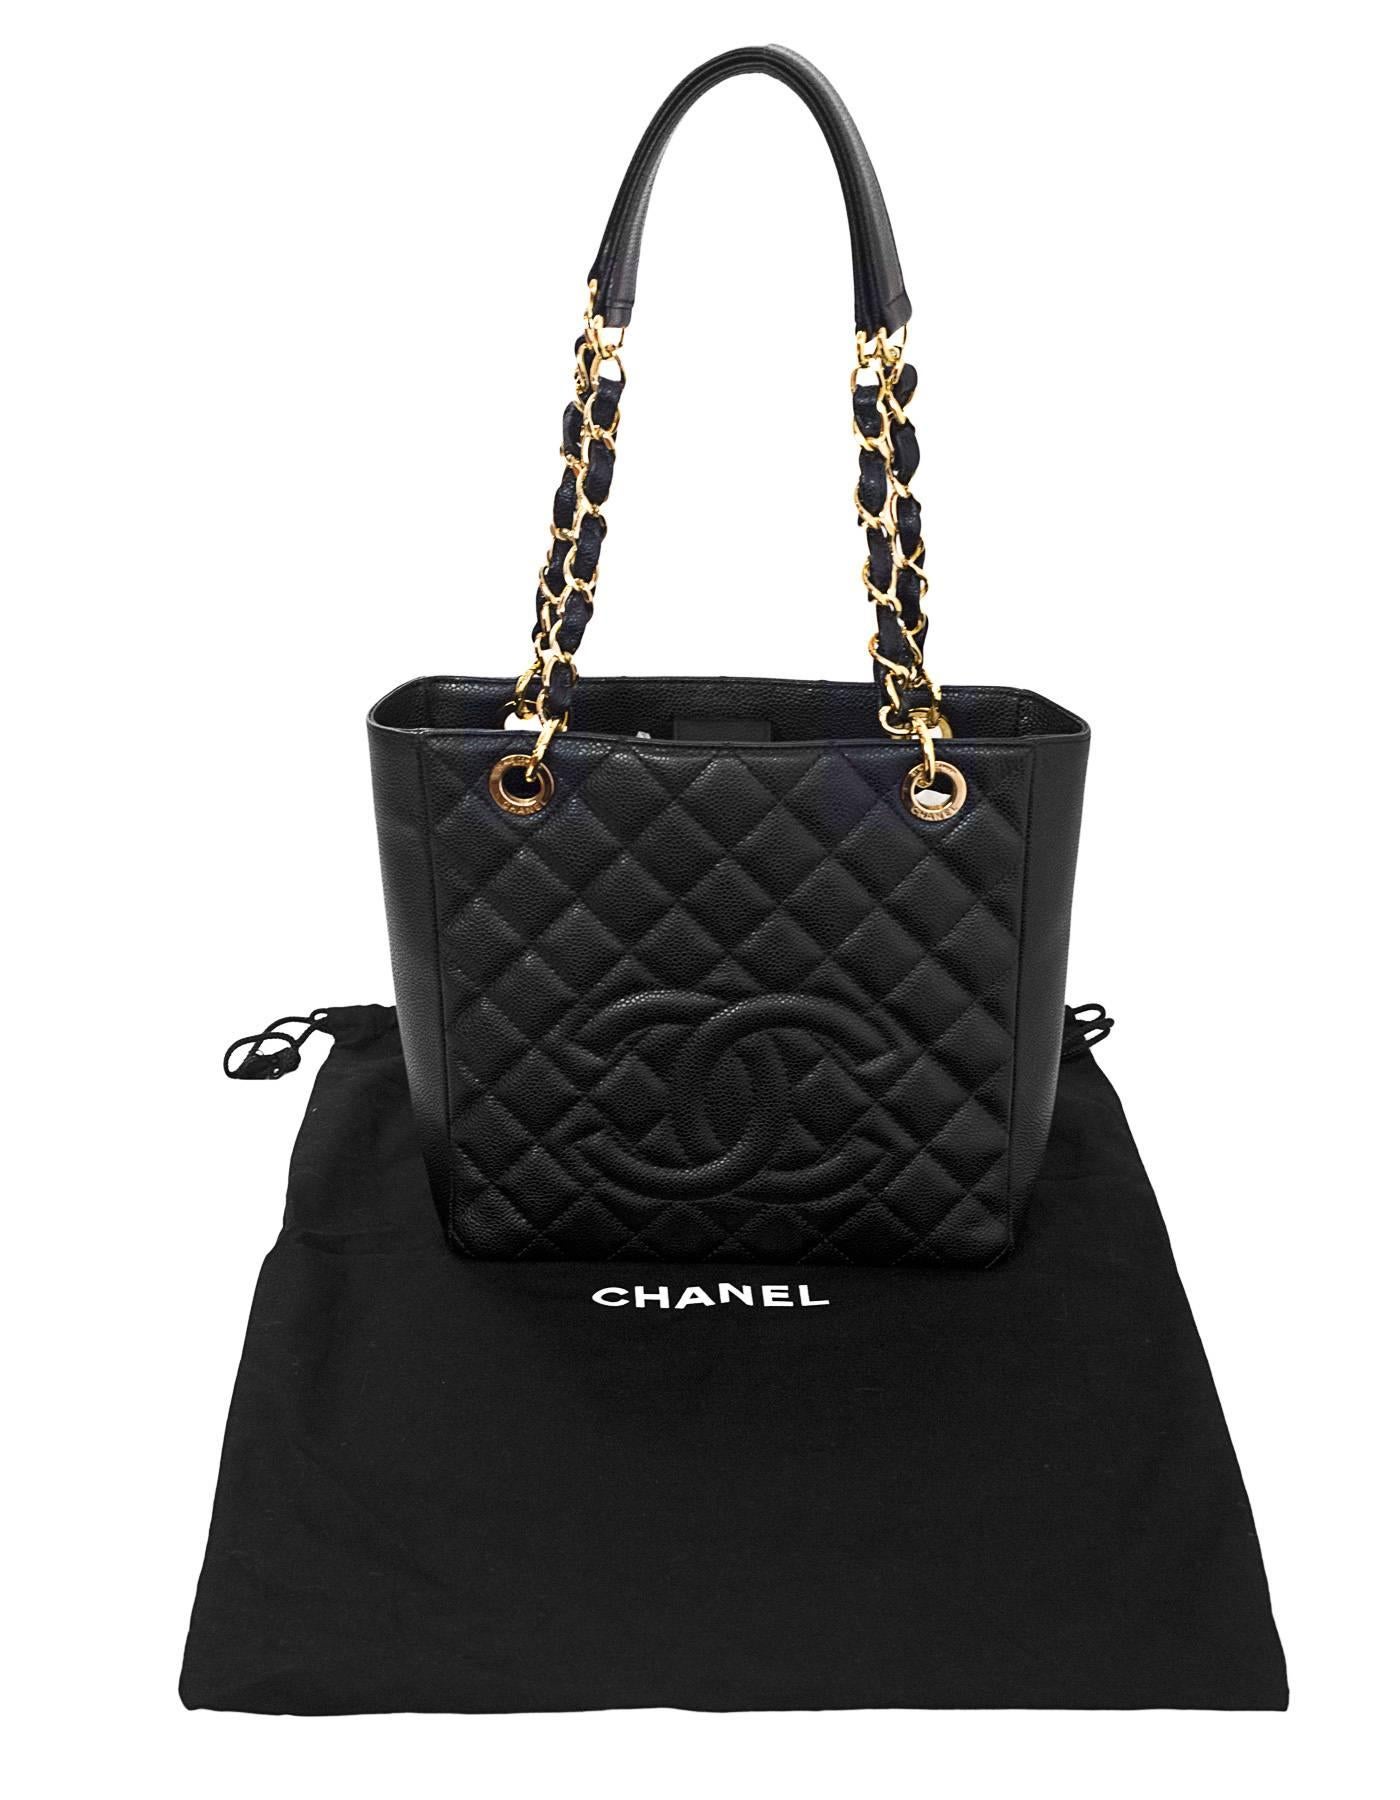 Chanel Black Caviar Leather PST Petite Shopper Tote Bag GHW 5